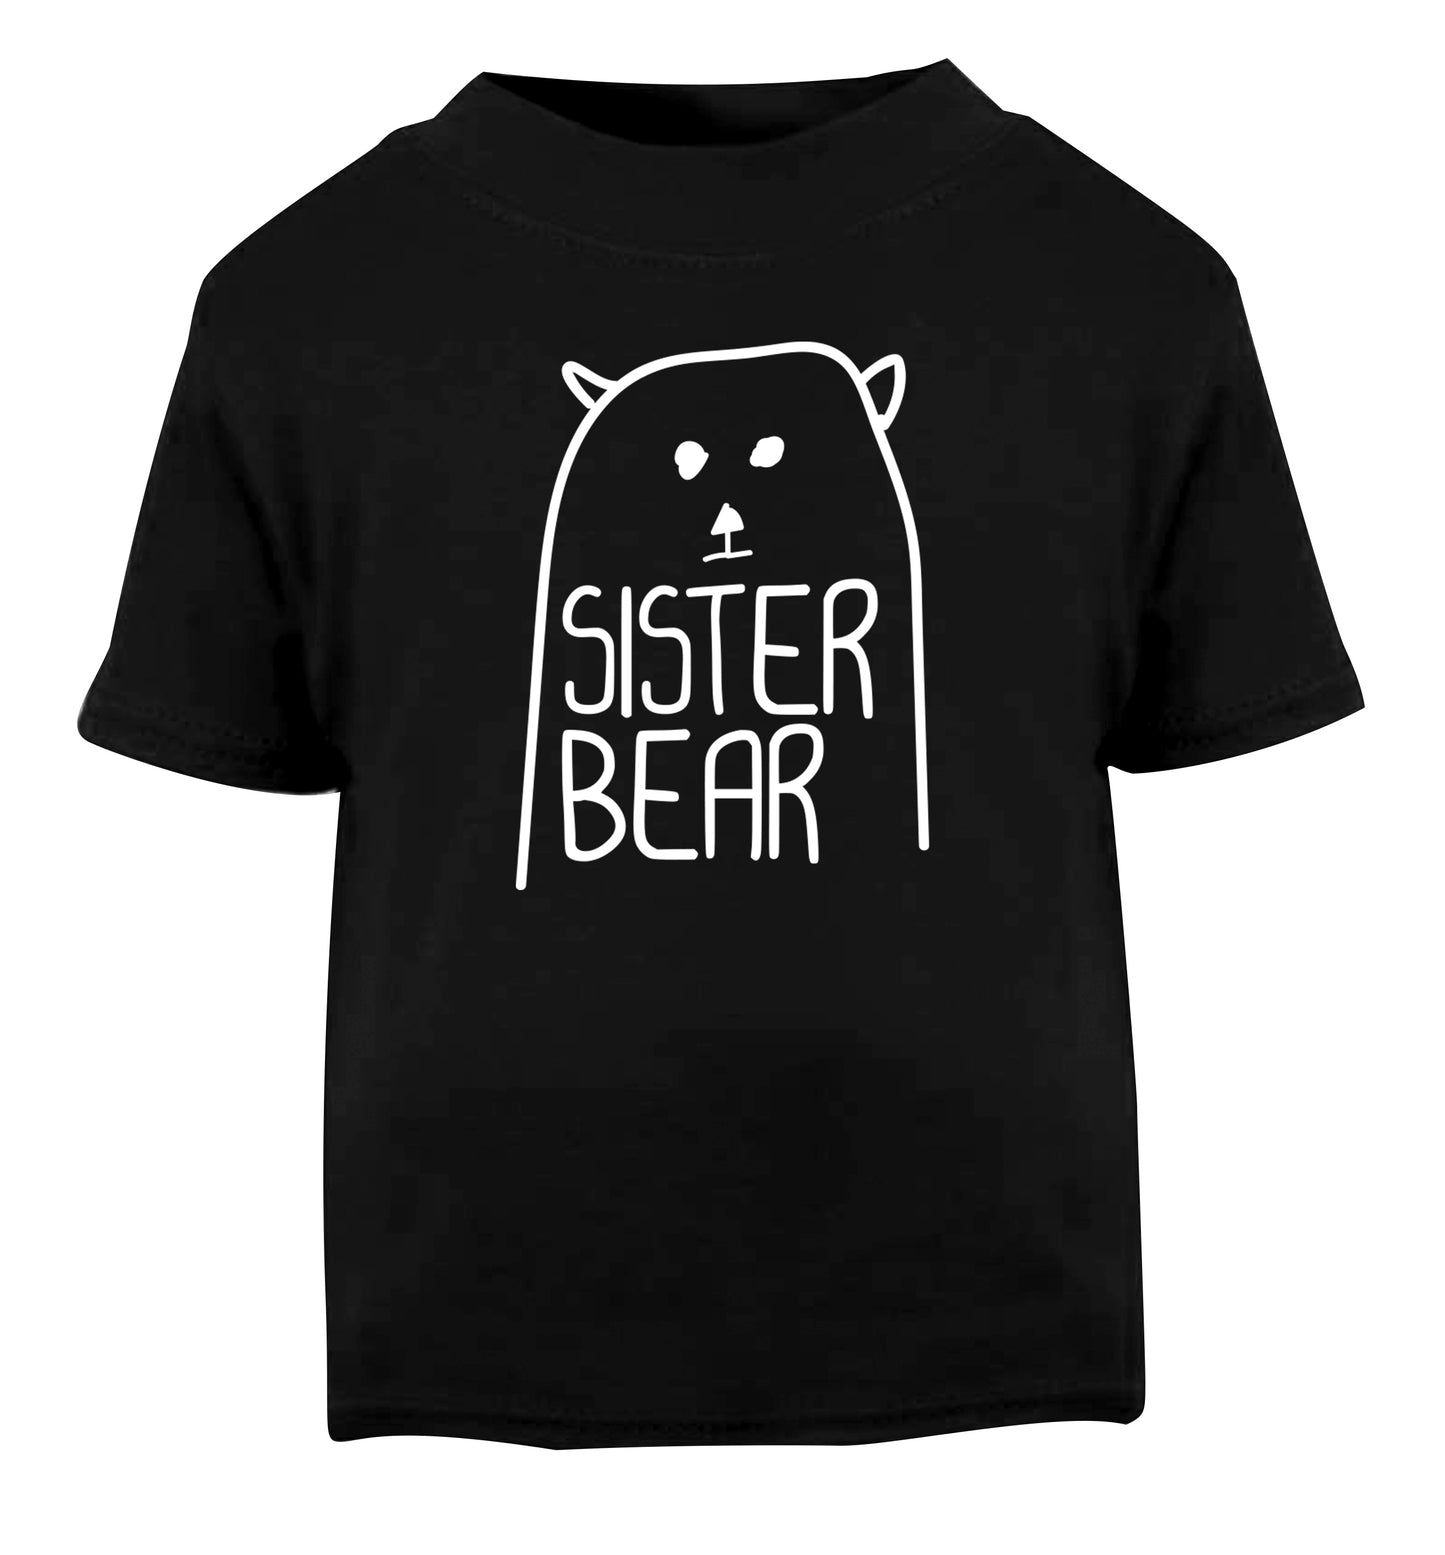 Sister bear Black Baby Toddler Tshirt 2 years